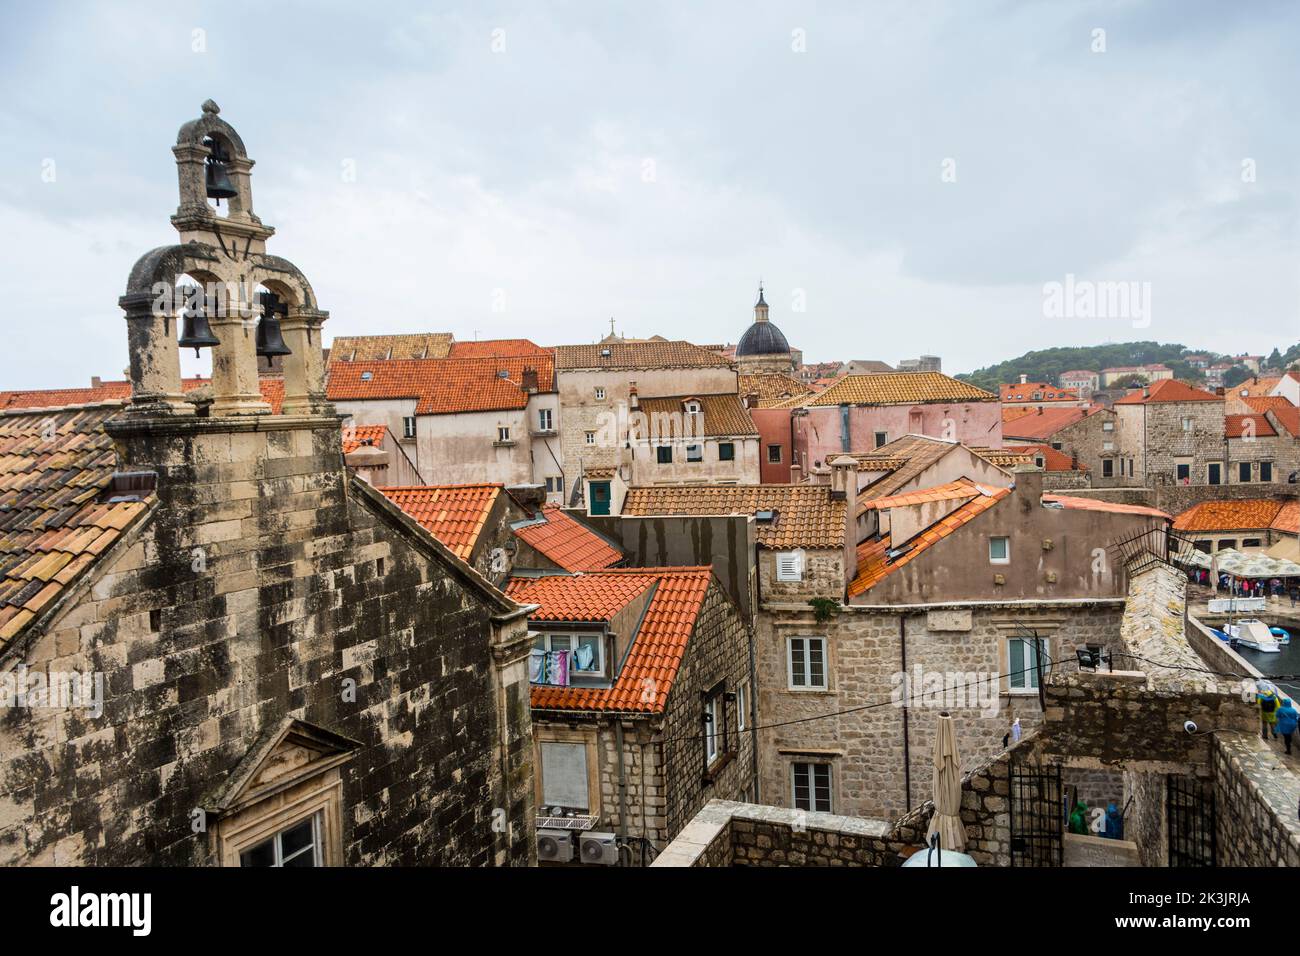 Überblick über die alte ummauerte Stadt Dubrovnik, Kroatien. Stockfoto